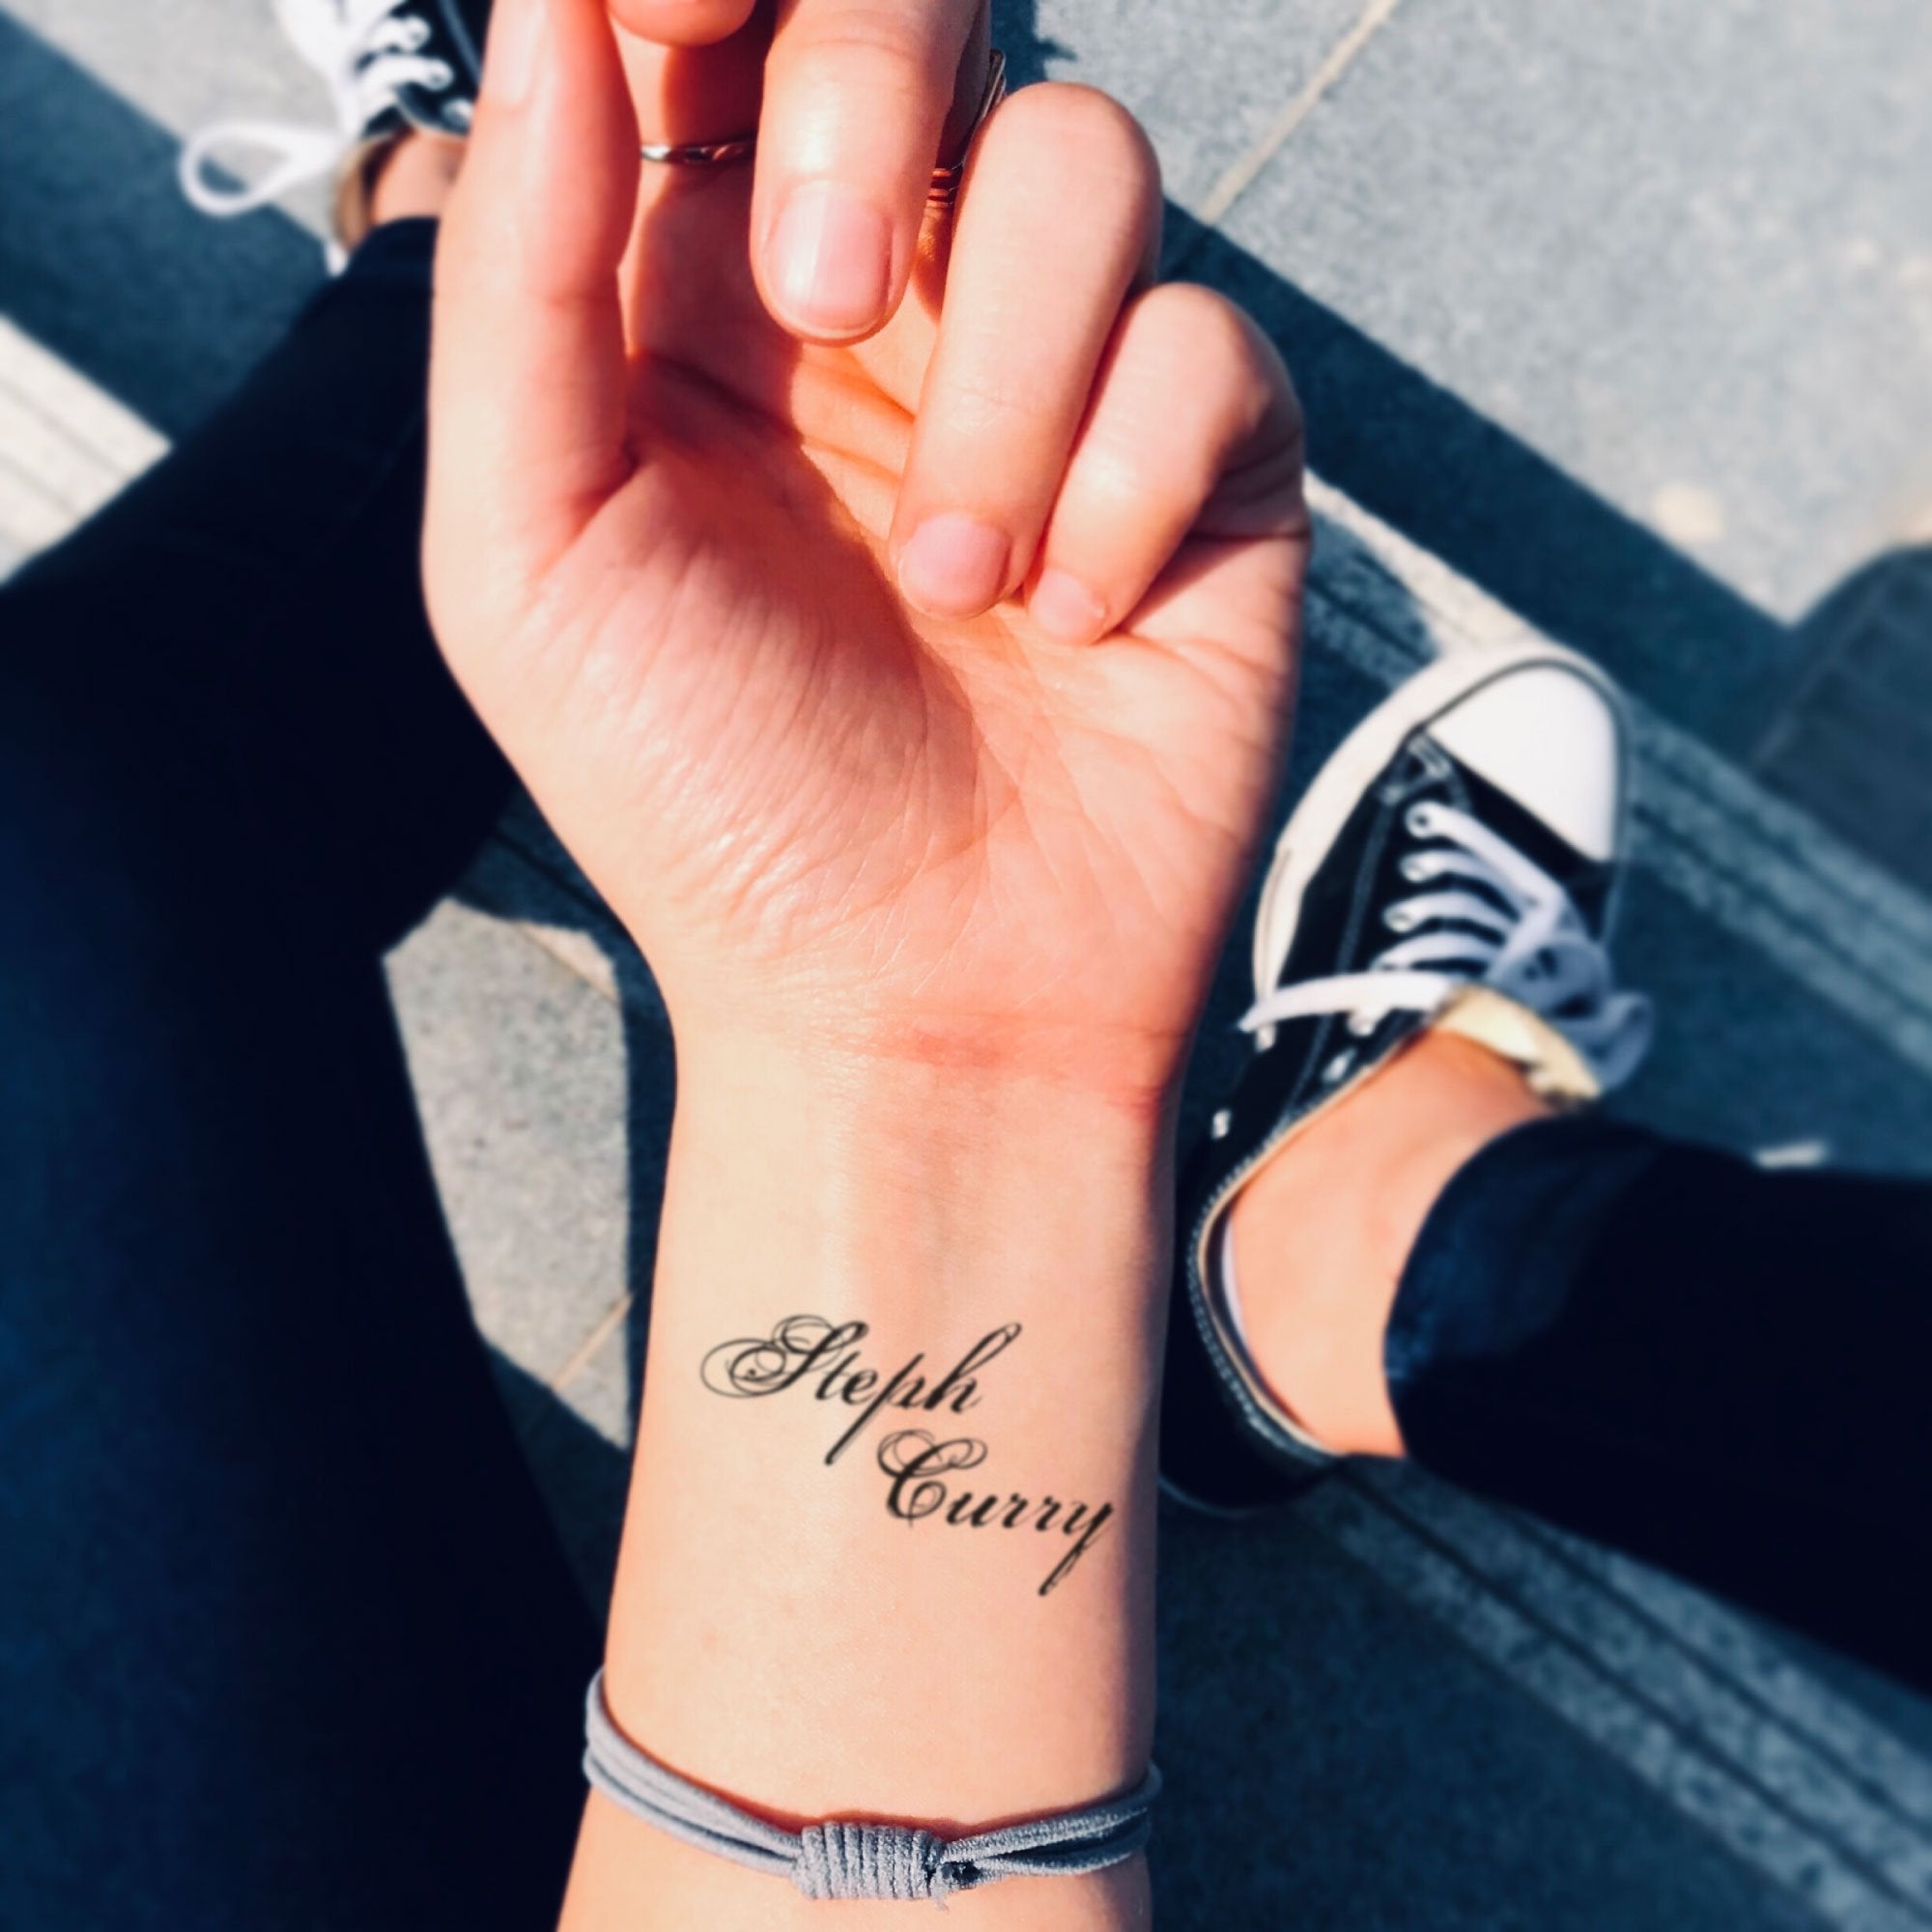 Steph Curry gets Hebrew tattoo on wrist